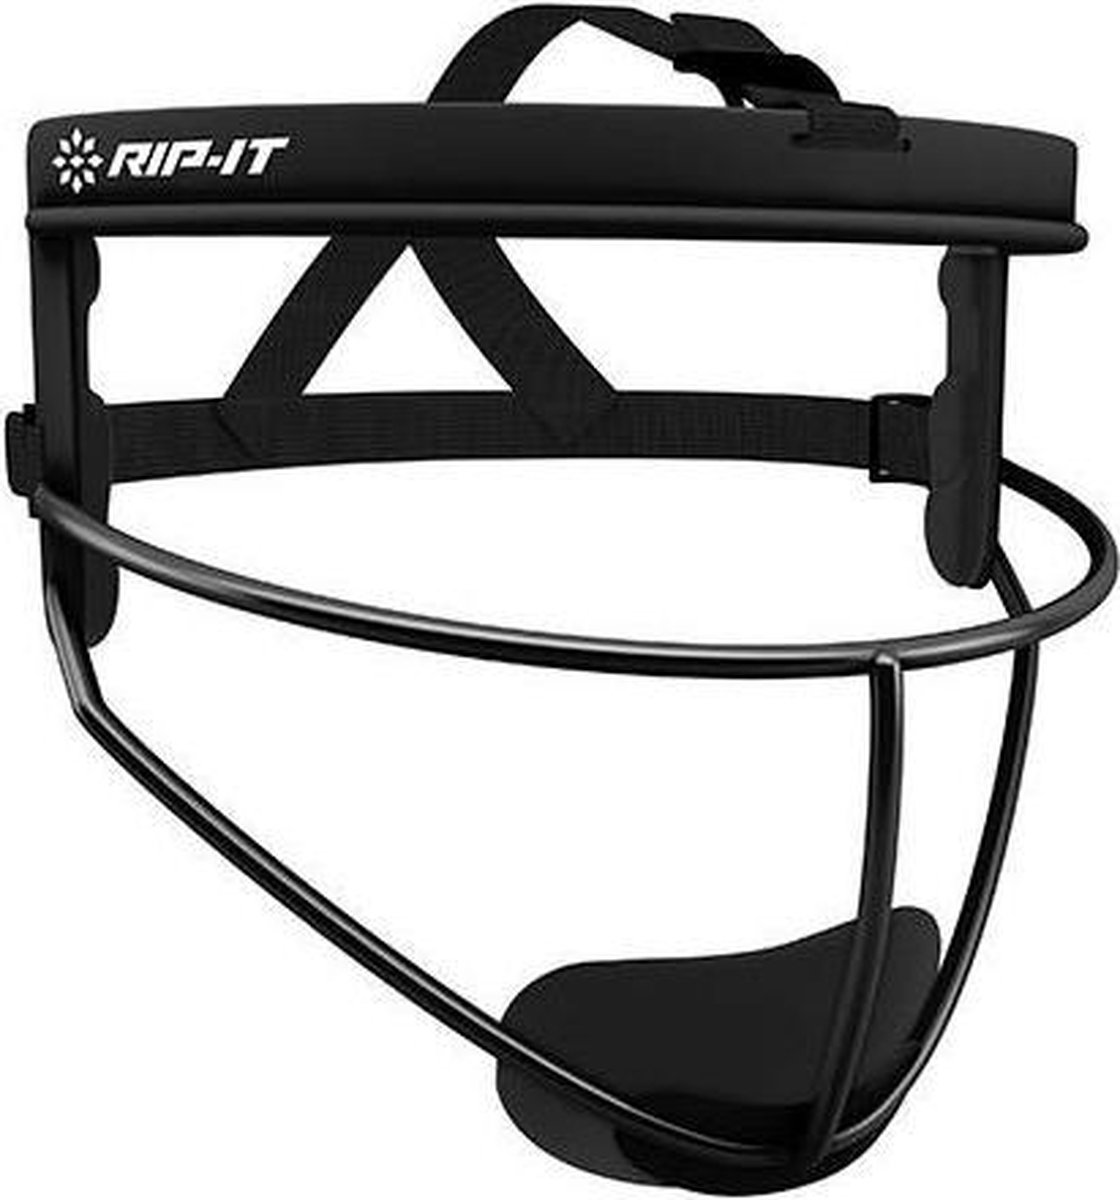 Rip-It Defense Pro Youth Softball Fielders Mask - Black